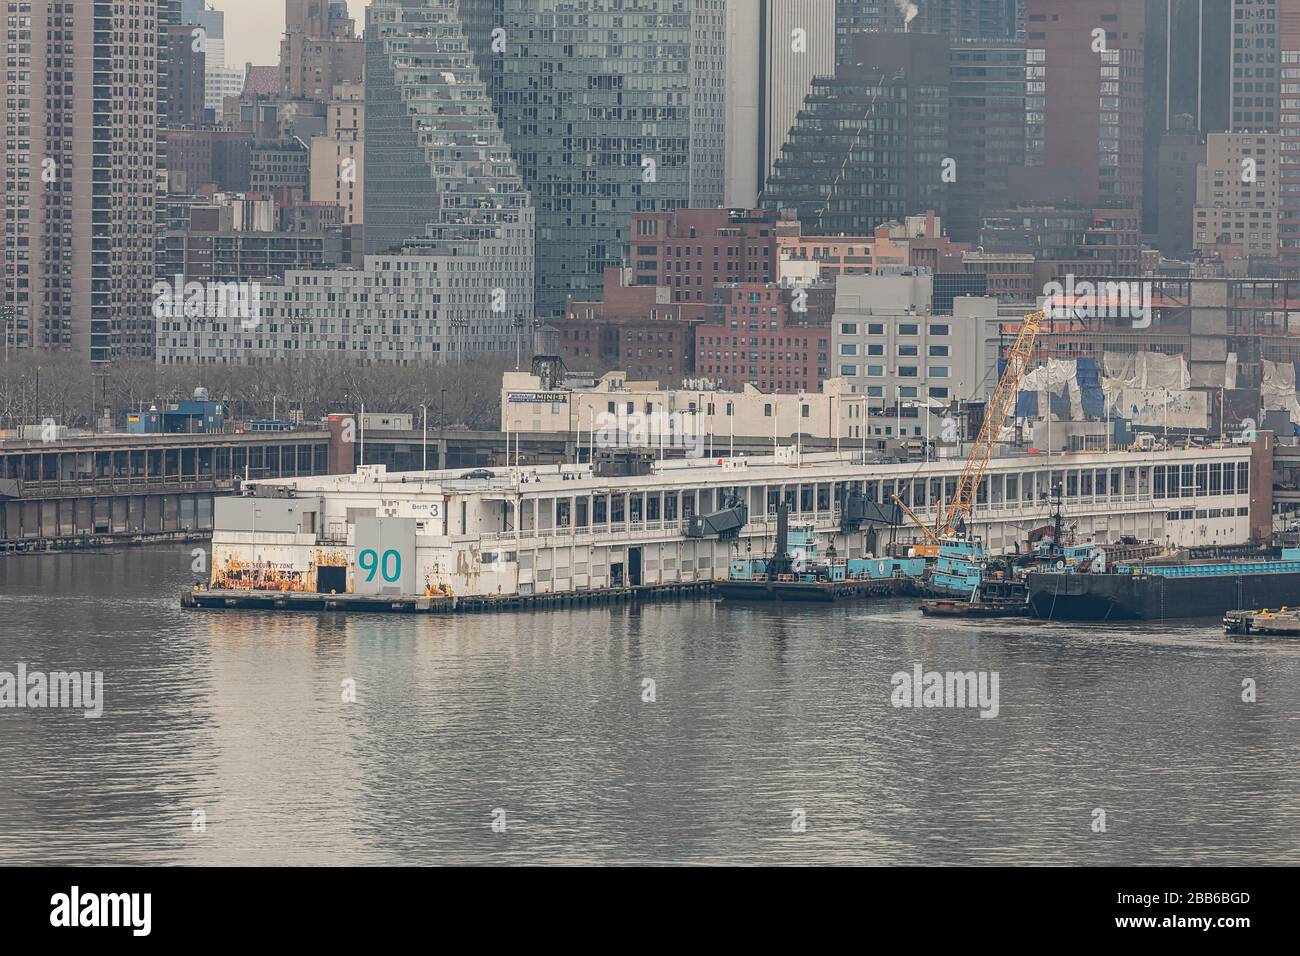 USNS Comfort NYC - il Molo 90 attende l'arrivo dell'US Naval Hospital Ship Comfort Manhattan a New York City. Foto Stock